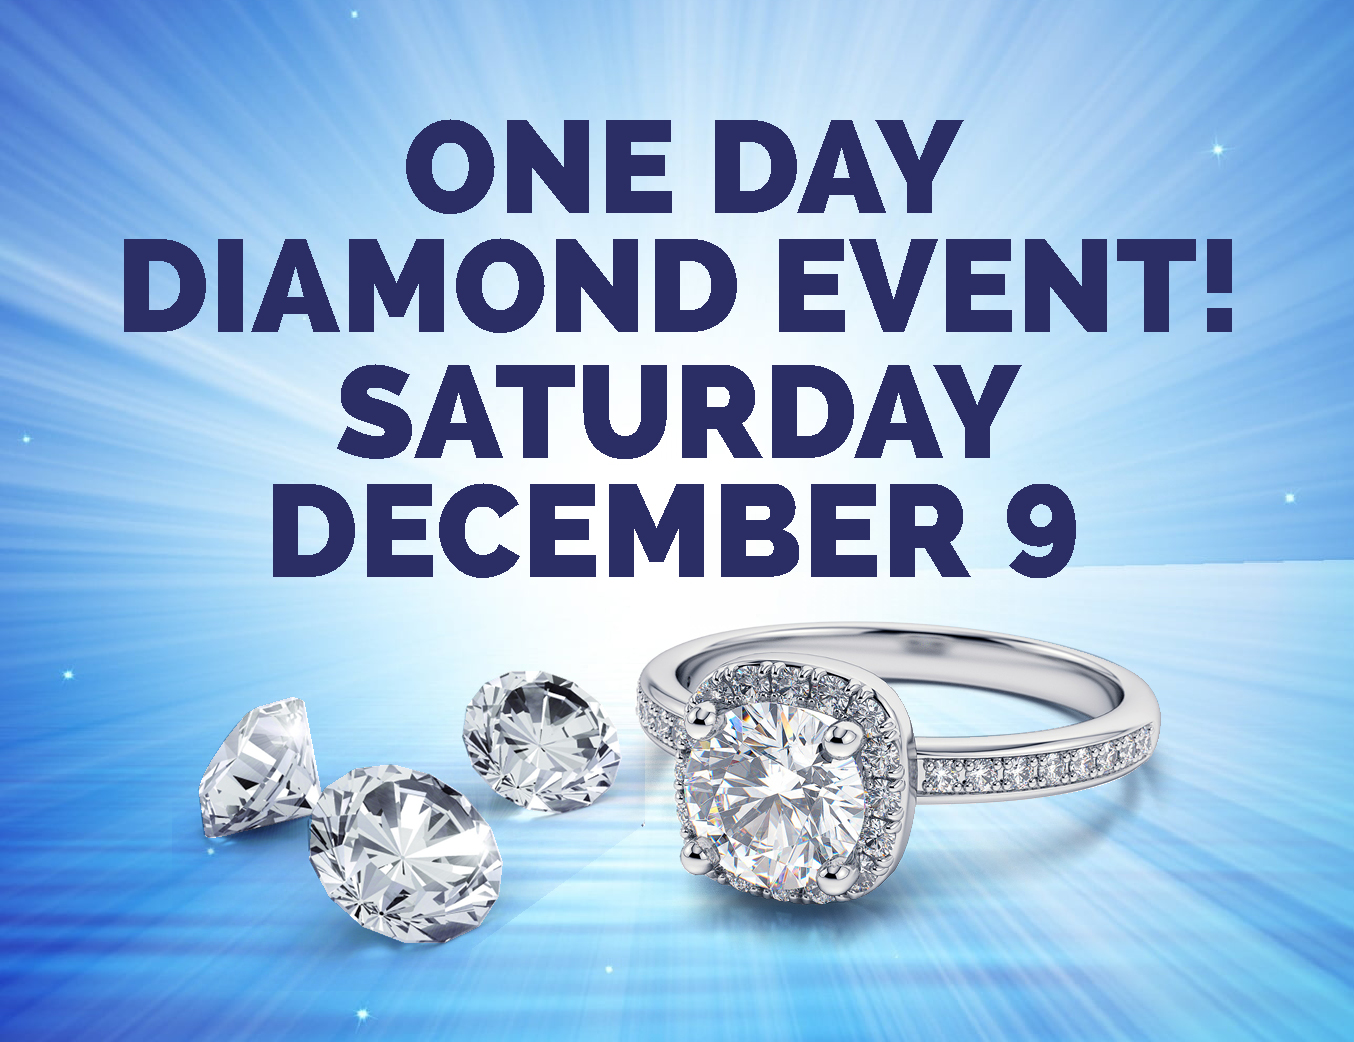 One Day Diamond Event